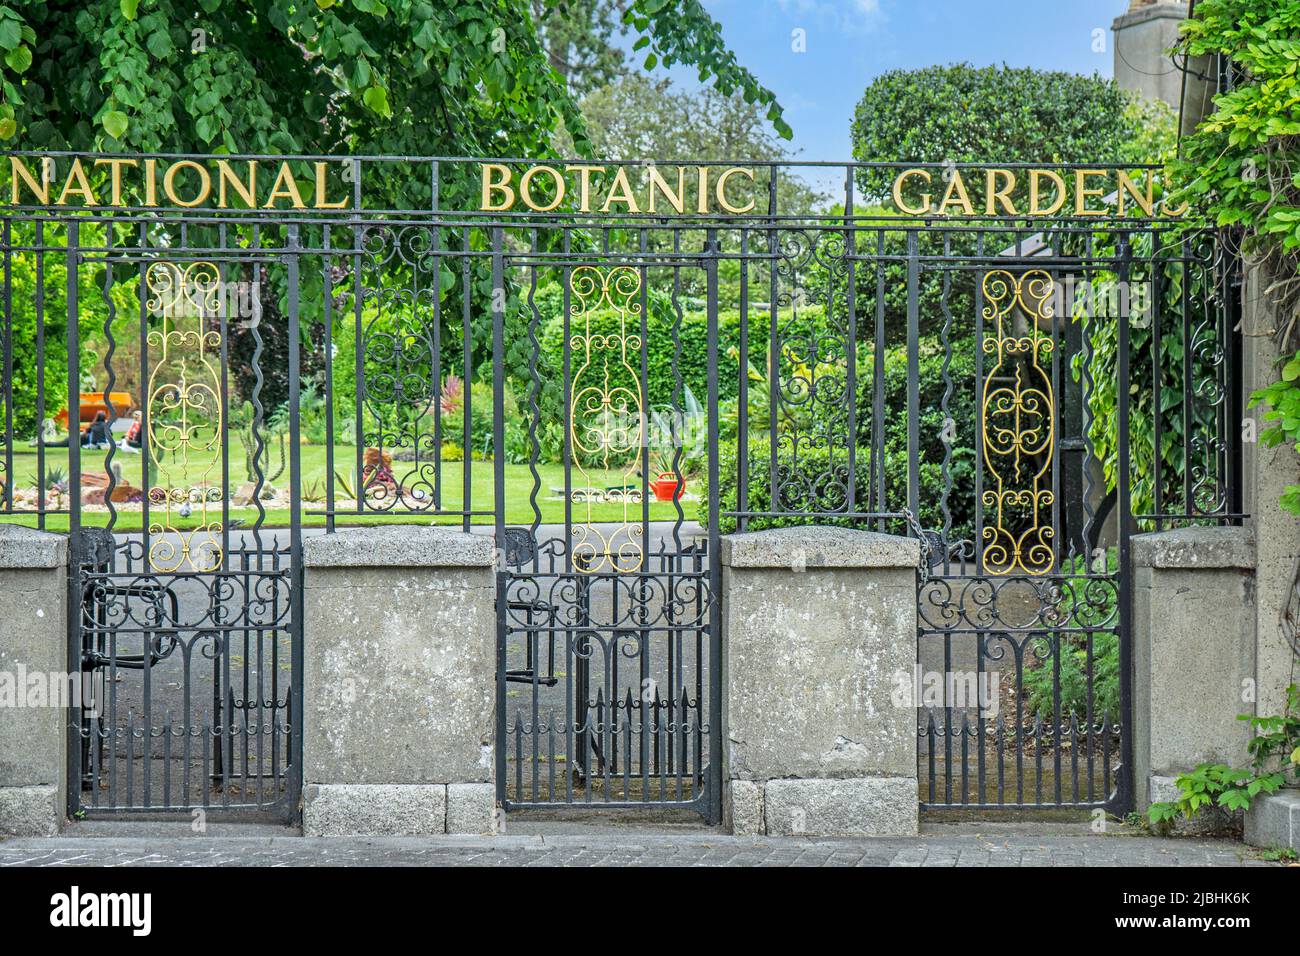 The entrance to the National Botanic Gardens in Glasnevin, Dublin, Ireland. Stock Photo